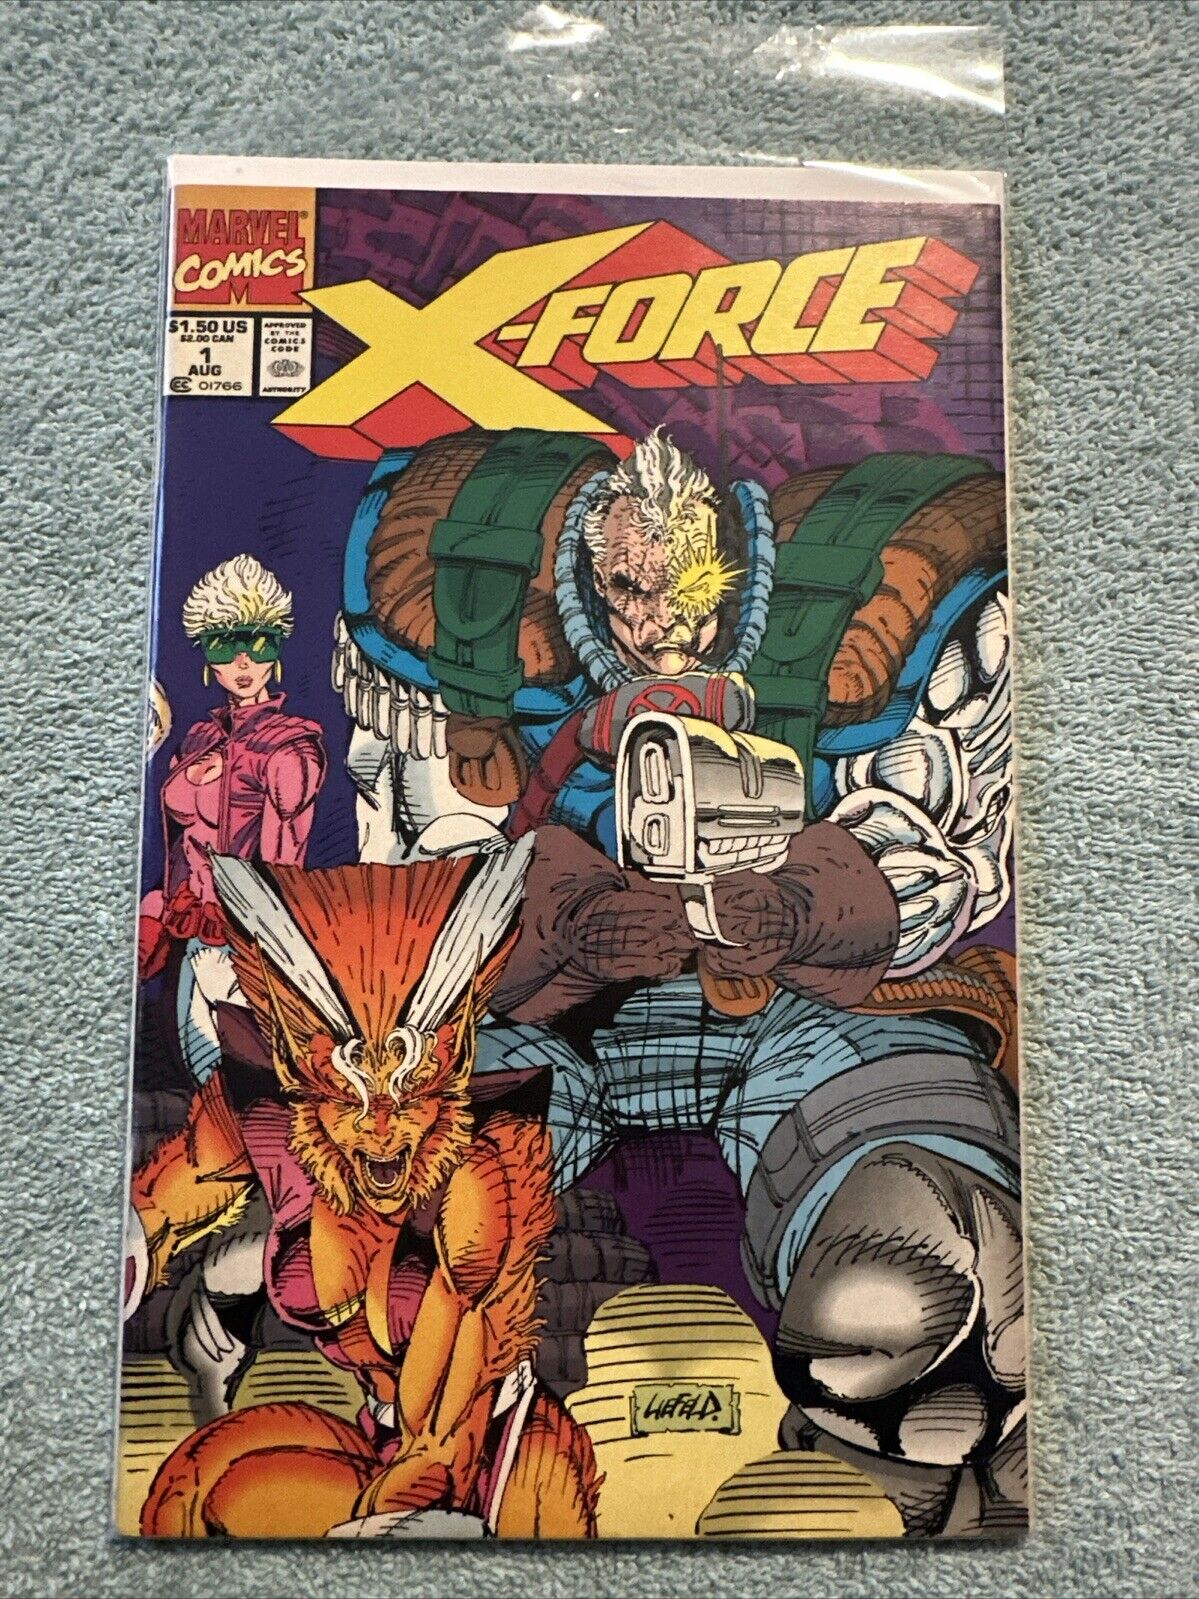 X-Force #1 (Marvel Comics August 1991)